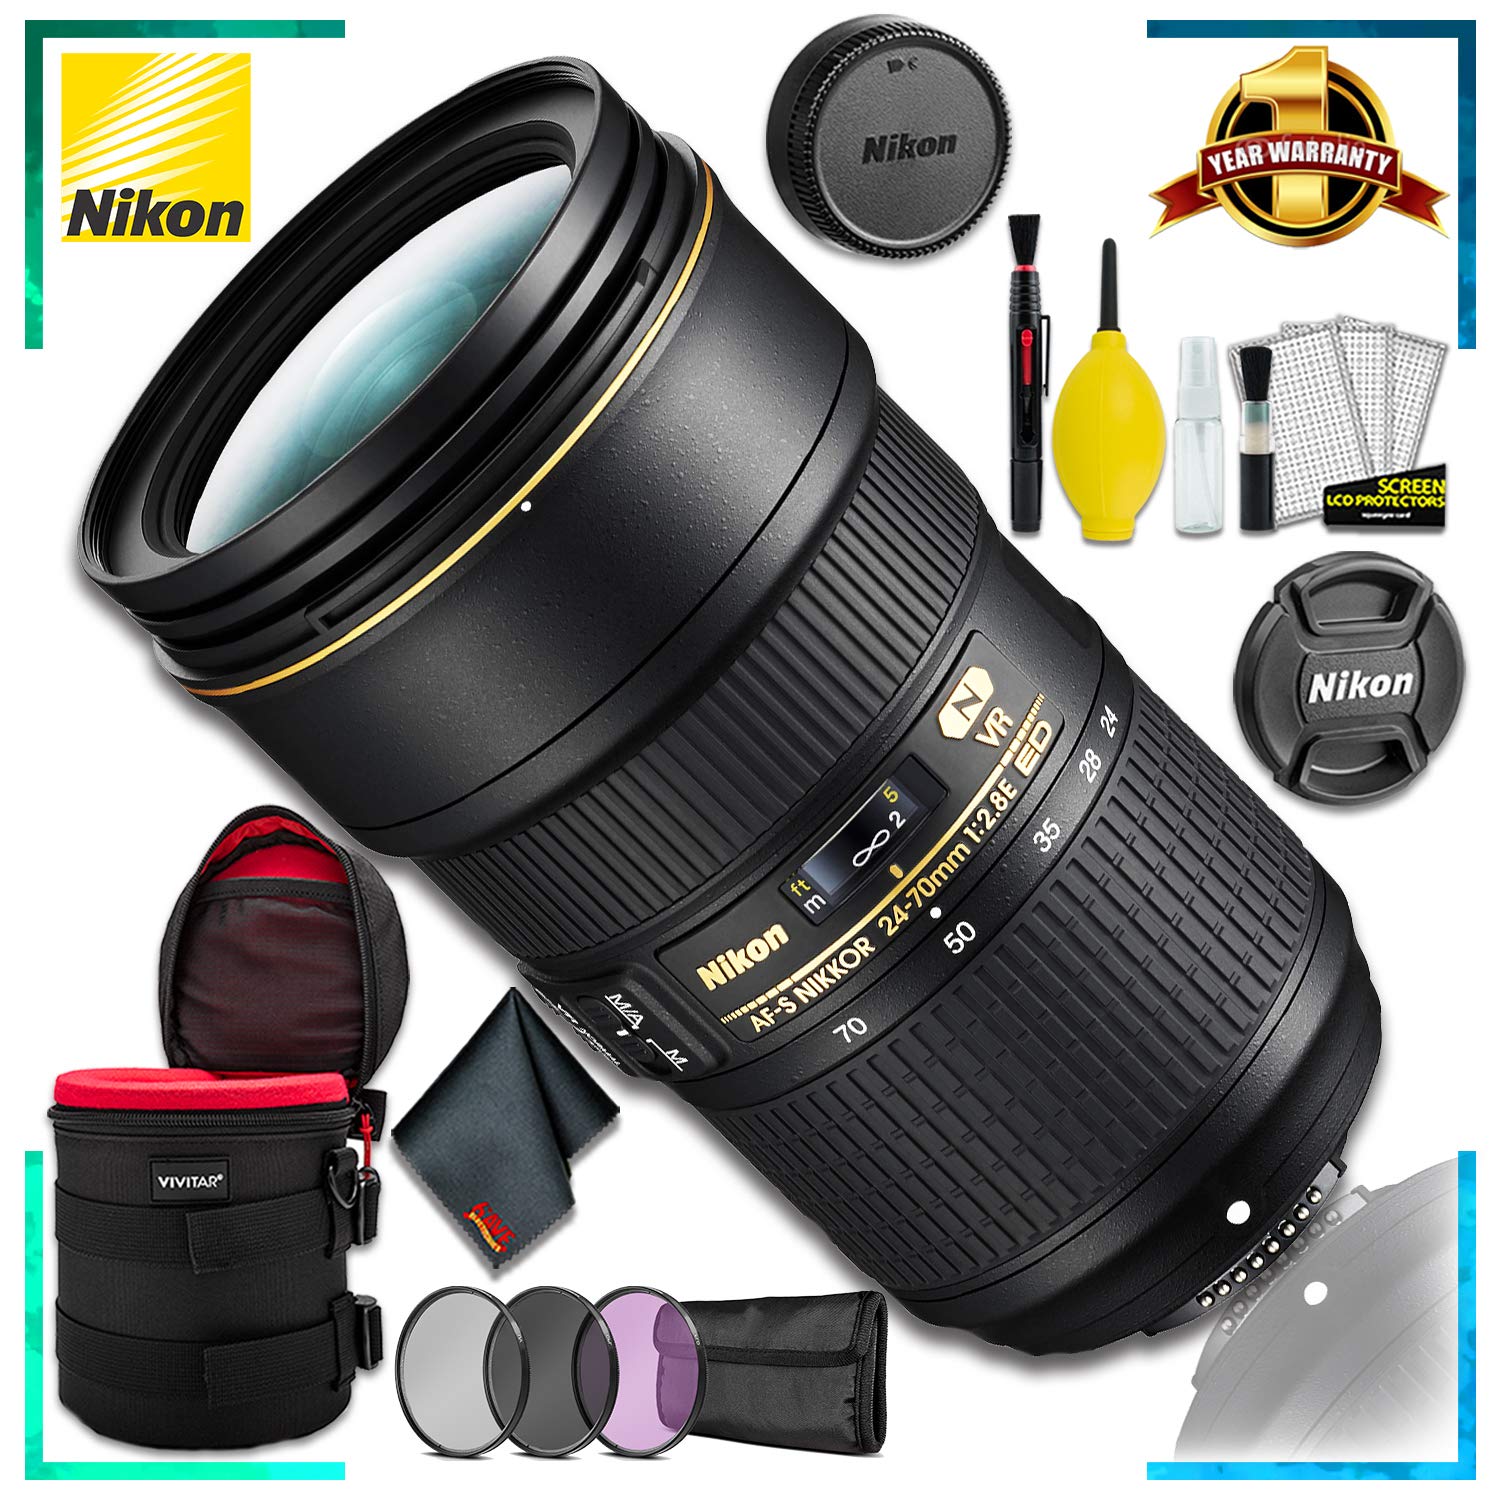 Nikon AF-S NIKKOR 24-70mm f/2.8E ED VR (Intl Model) + 8 Inch Vivitar Premium Lens Case + 3pcs UV Lens Filter Kit + Cleaning Kit